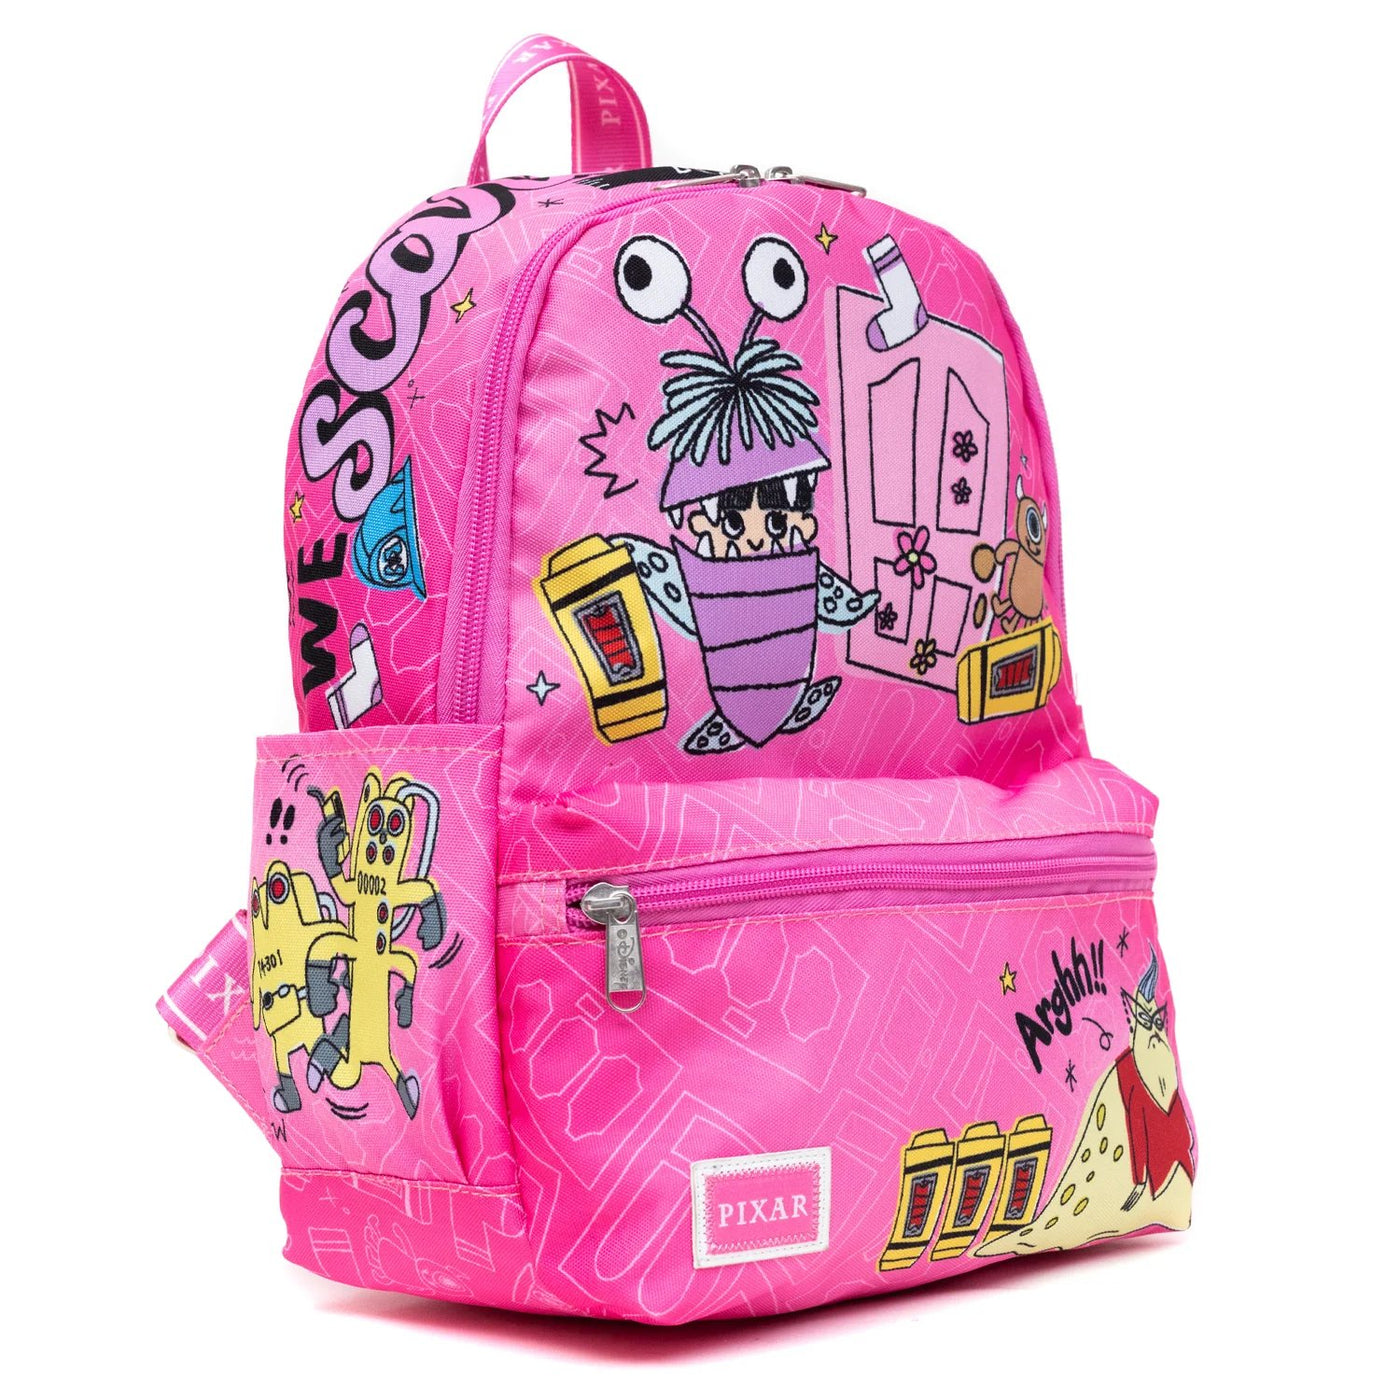 WondaPop Pixar Monsters Inc Nylon Mini Backpack - Side View